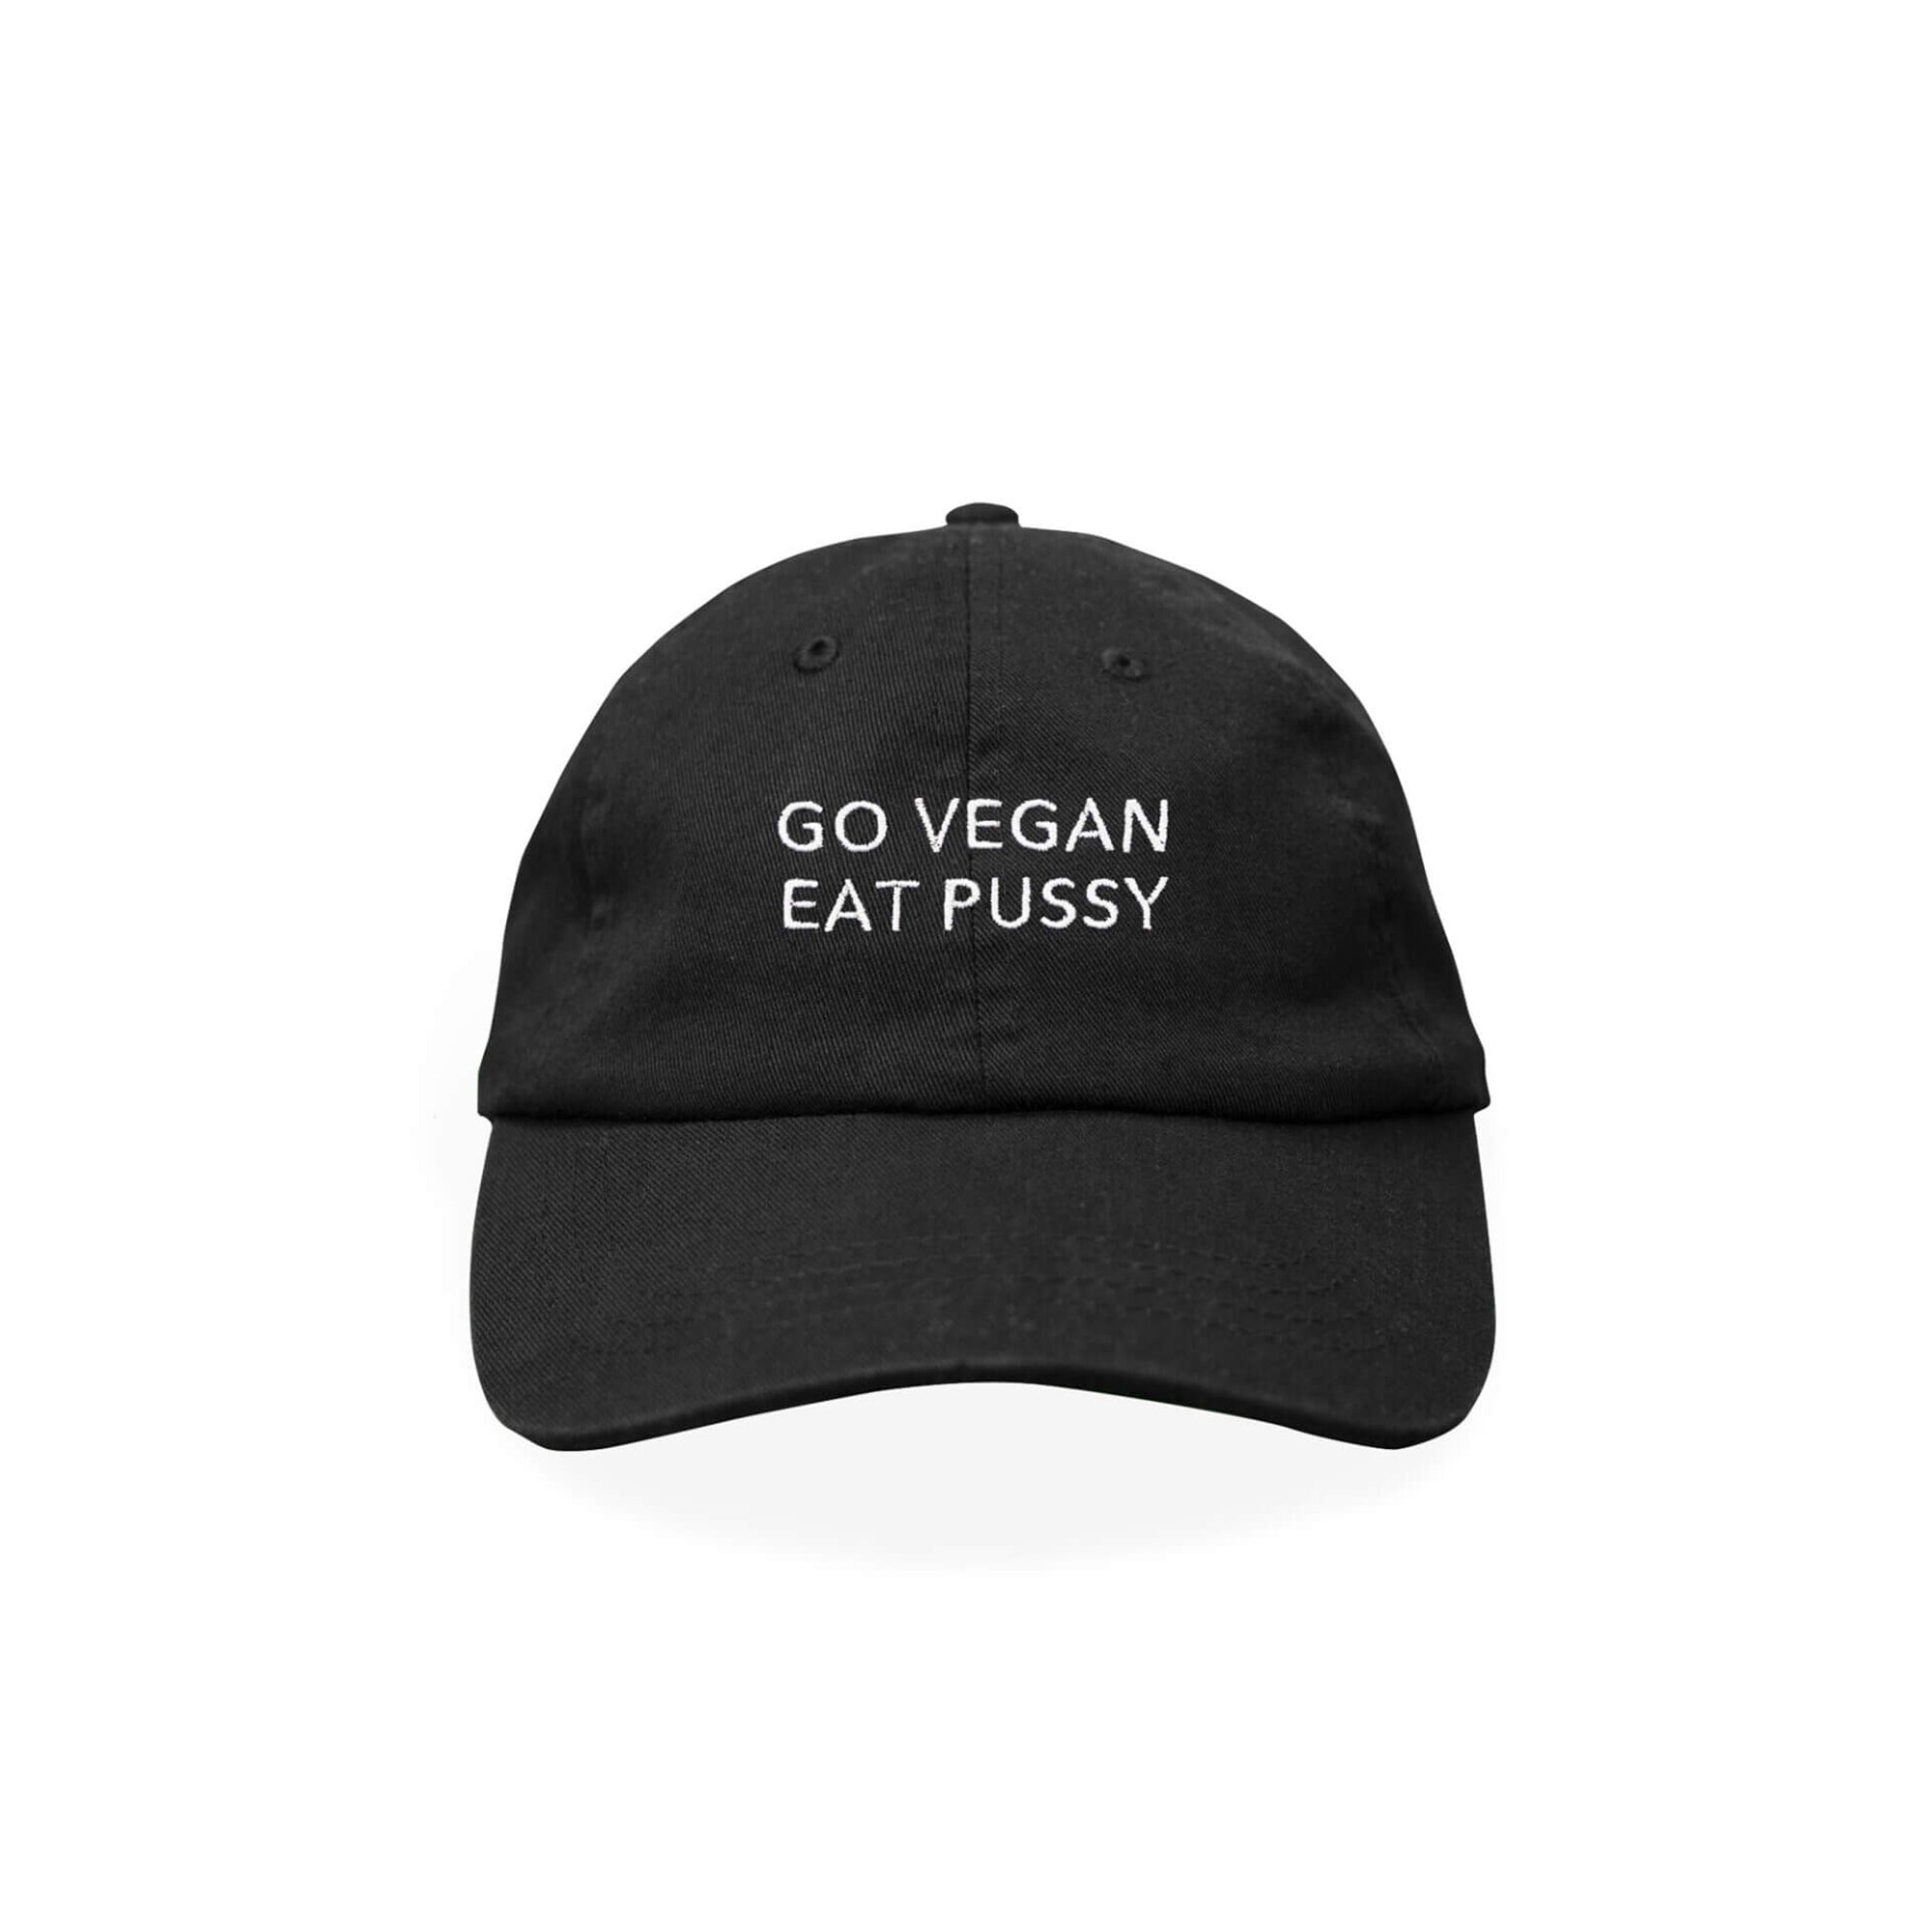 Go vegan eat pussy